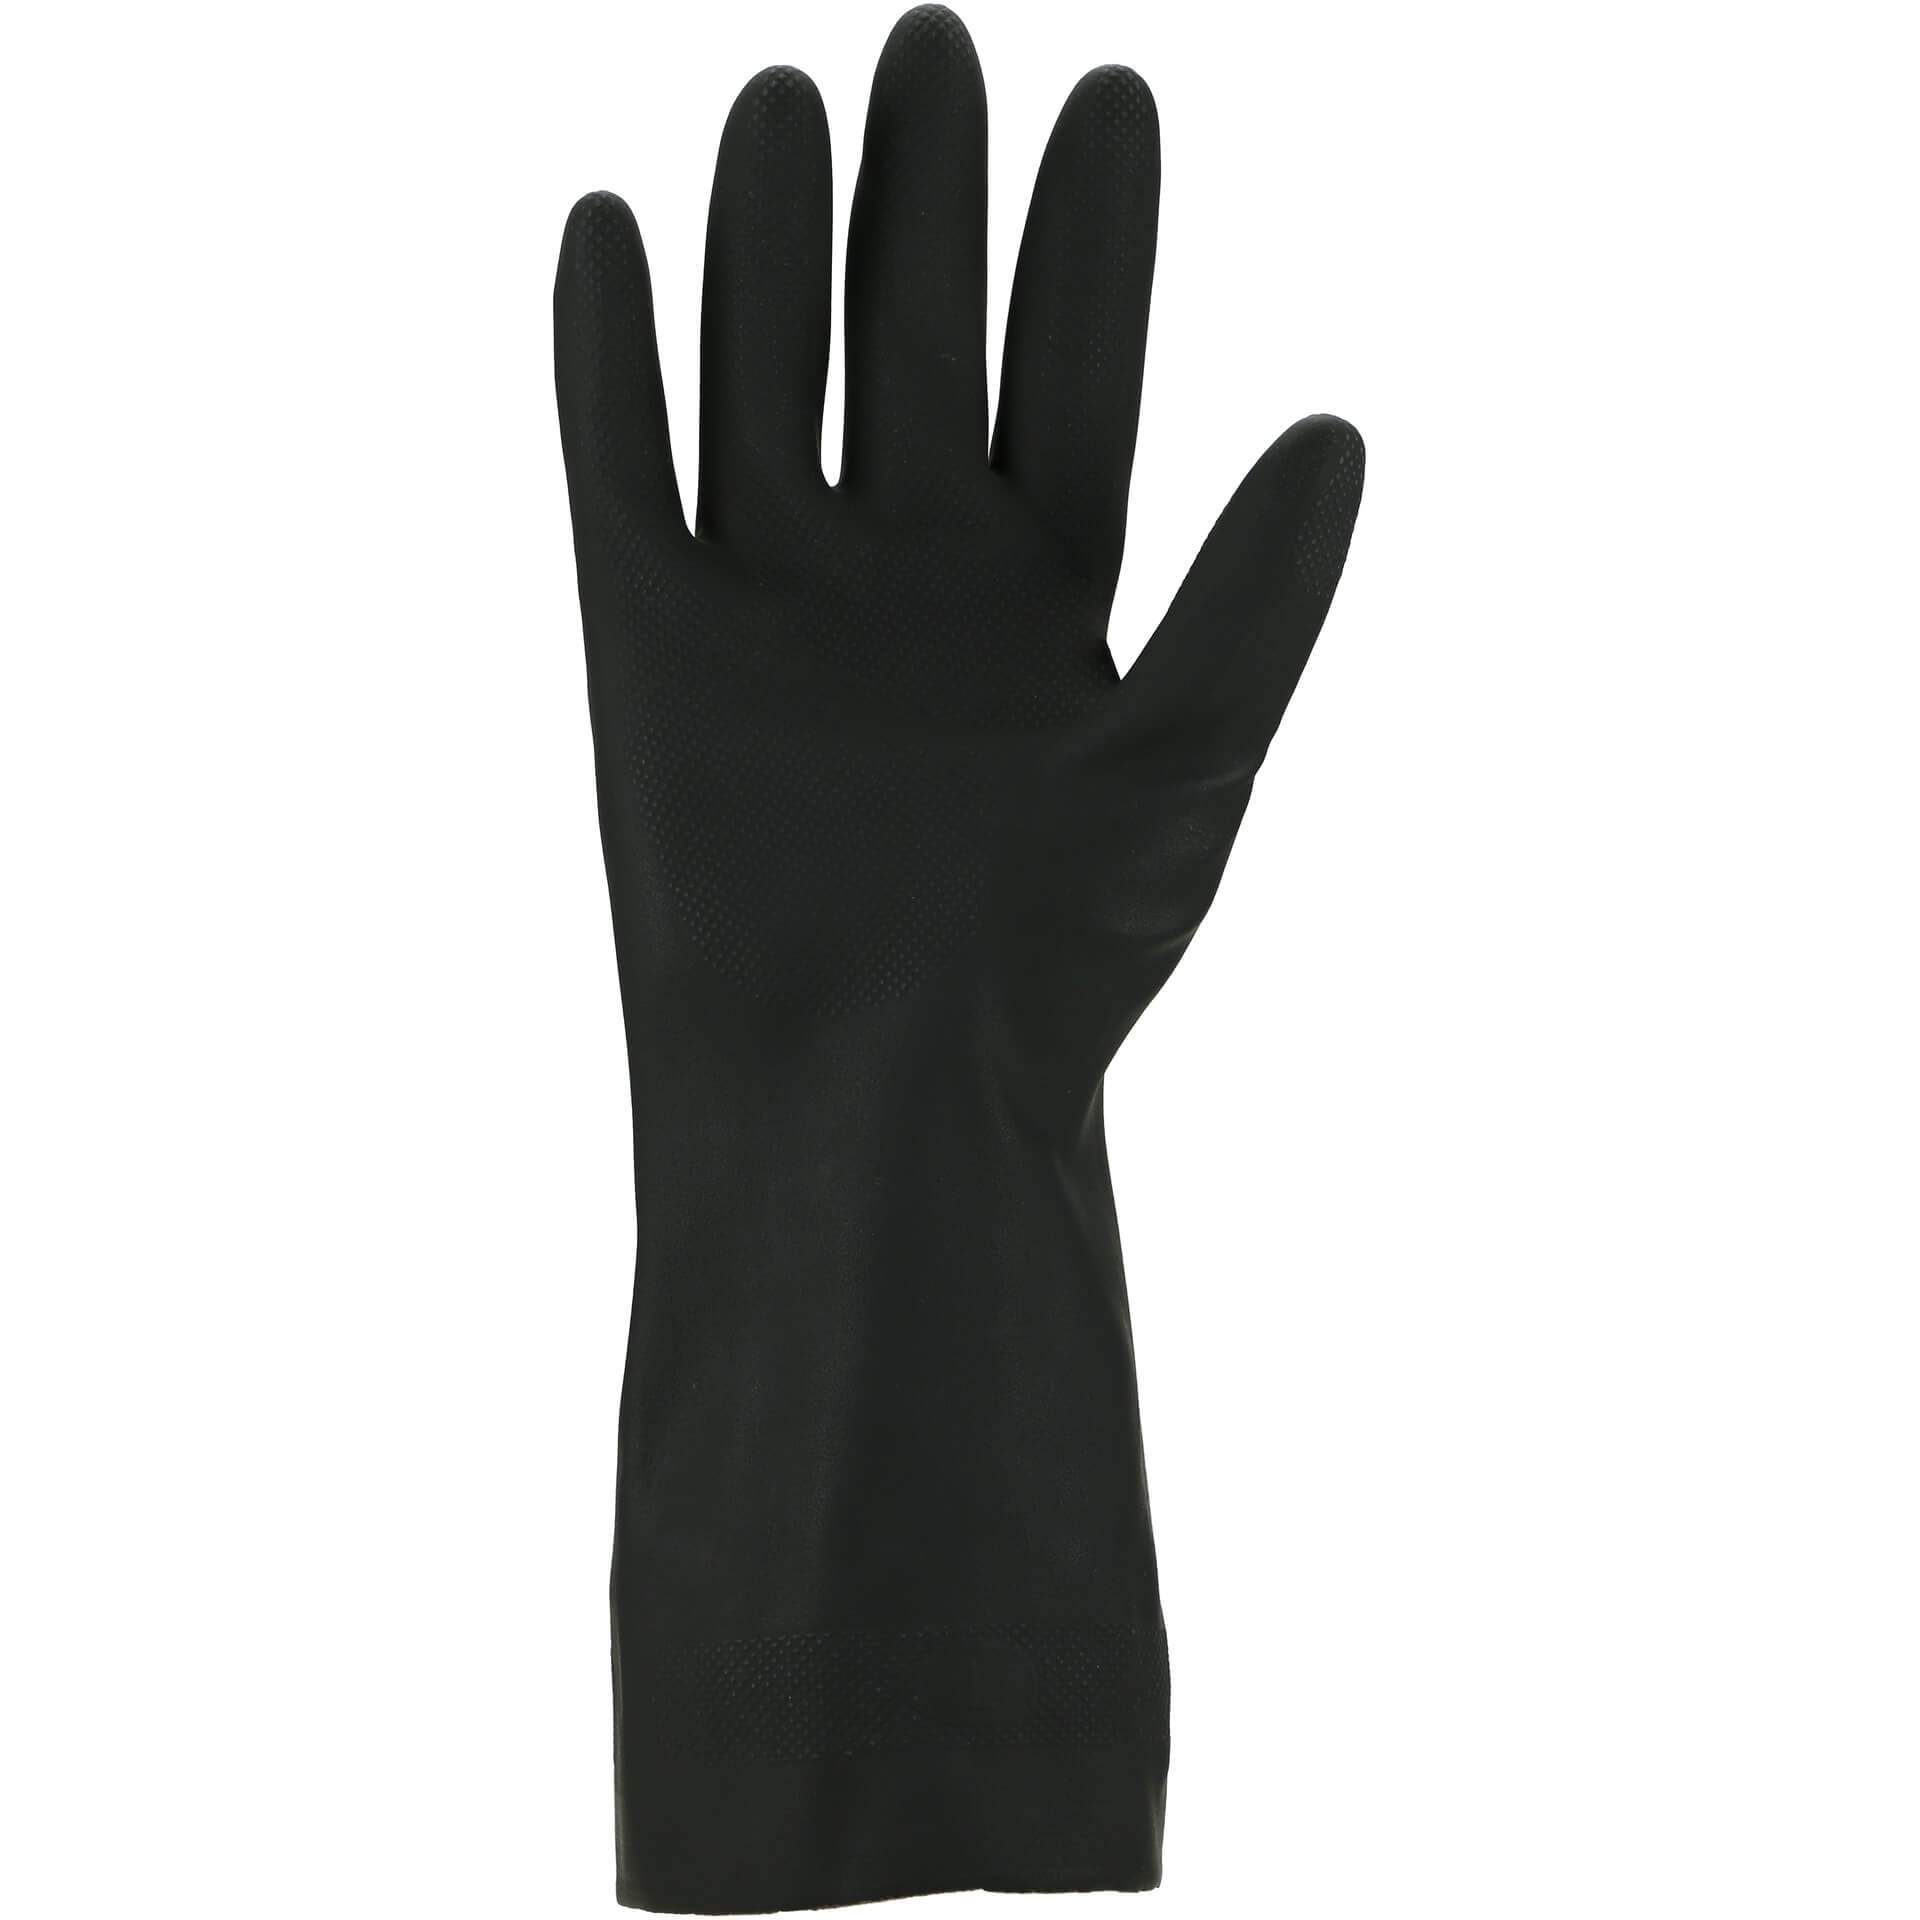 Chemikalienschutz-Handschuh - Latex 